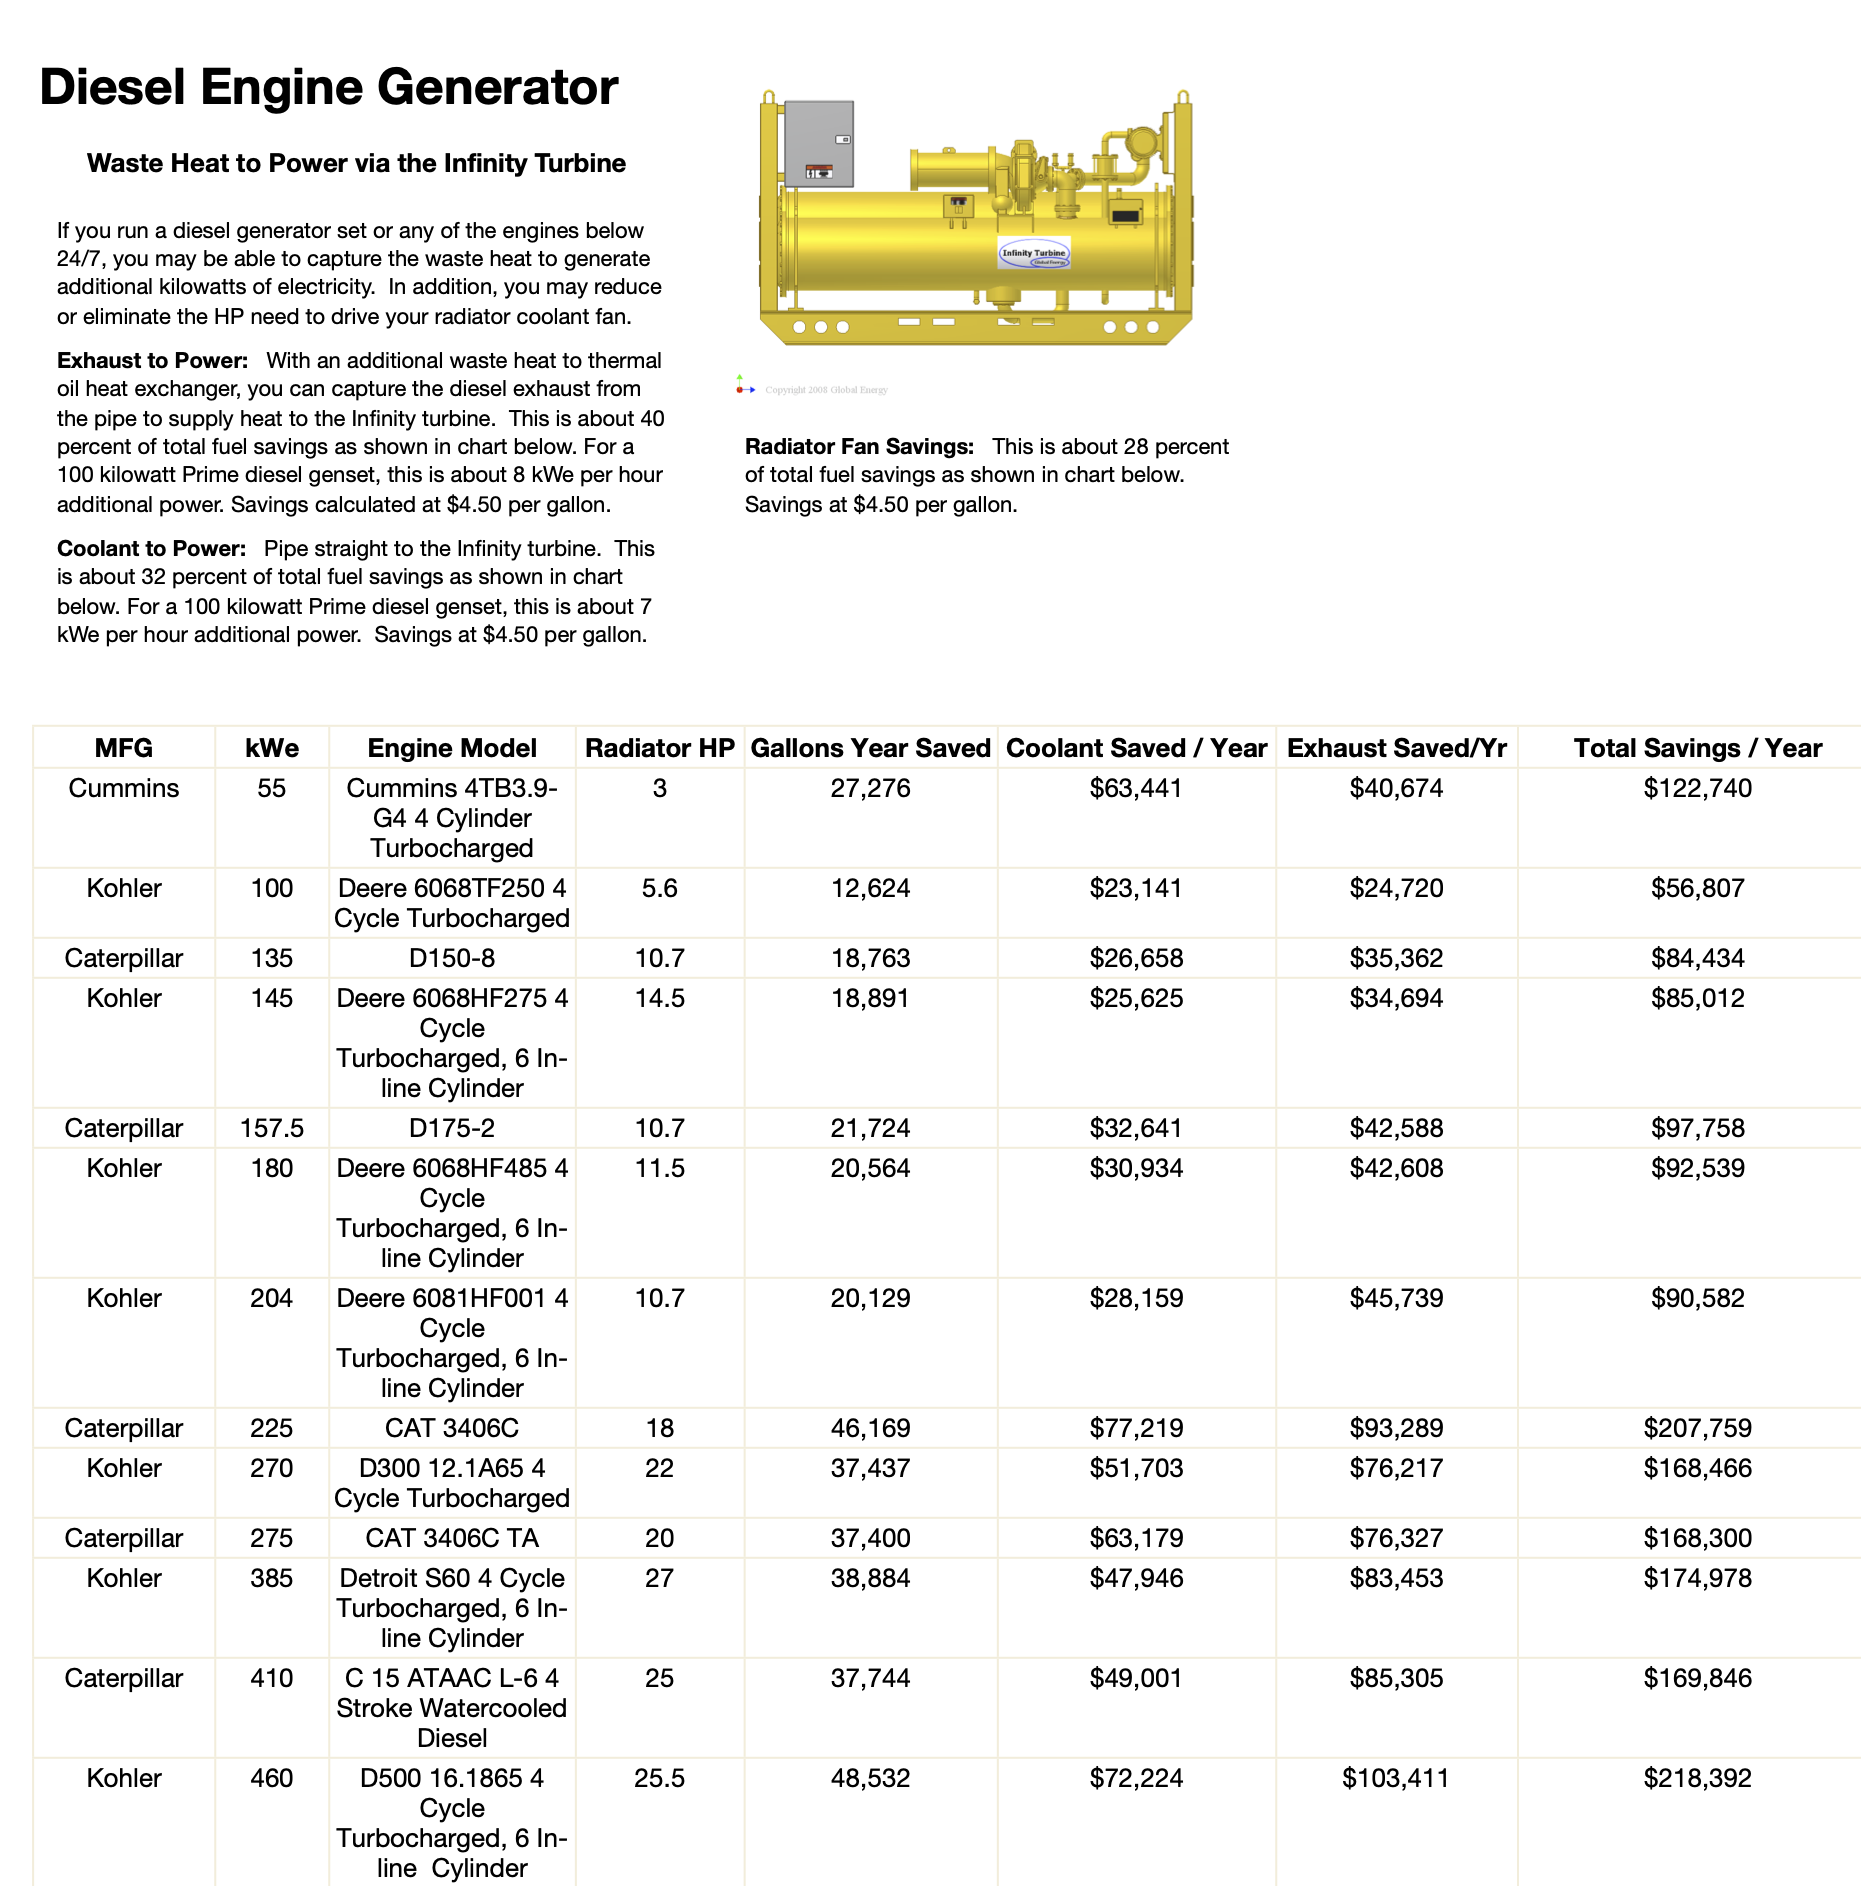 Diesel Generator ORC Power Savings Per Year